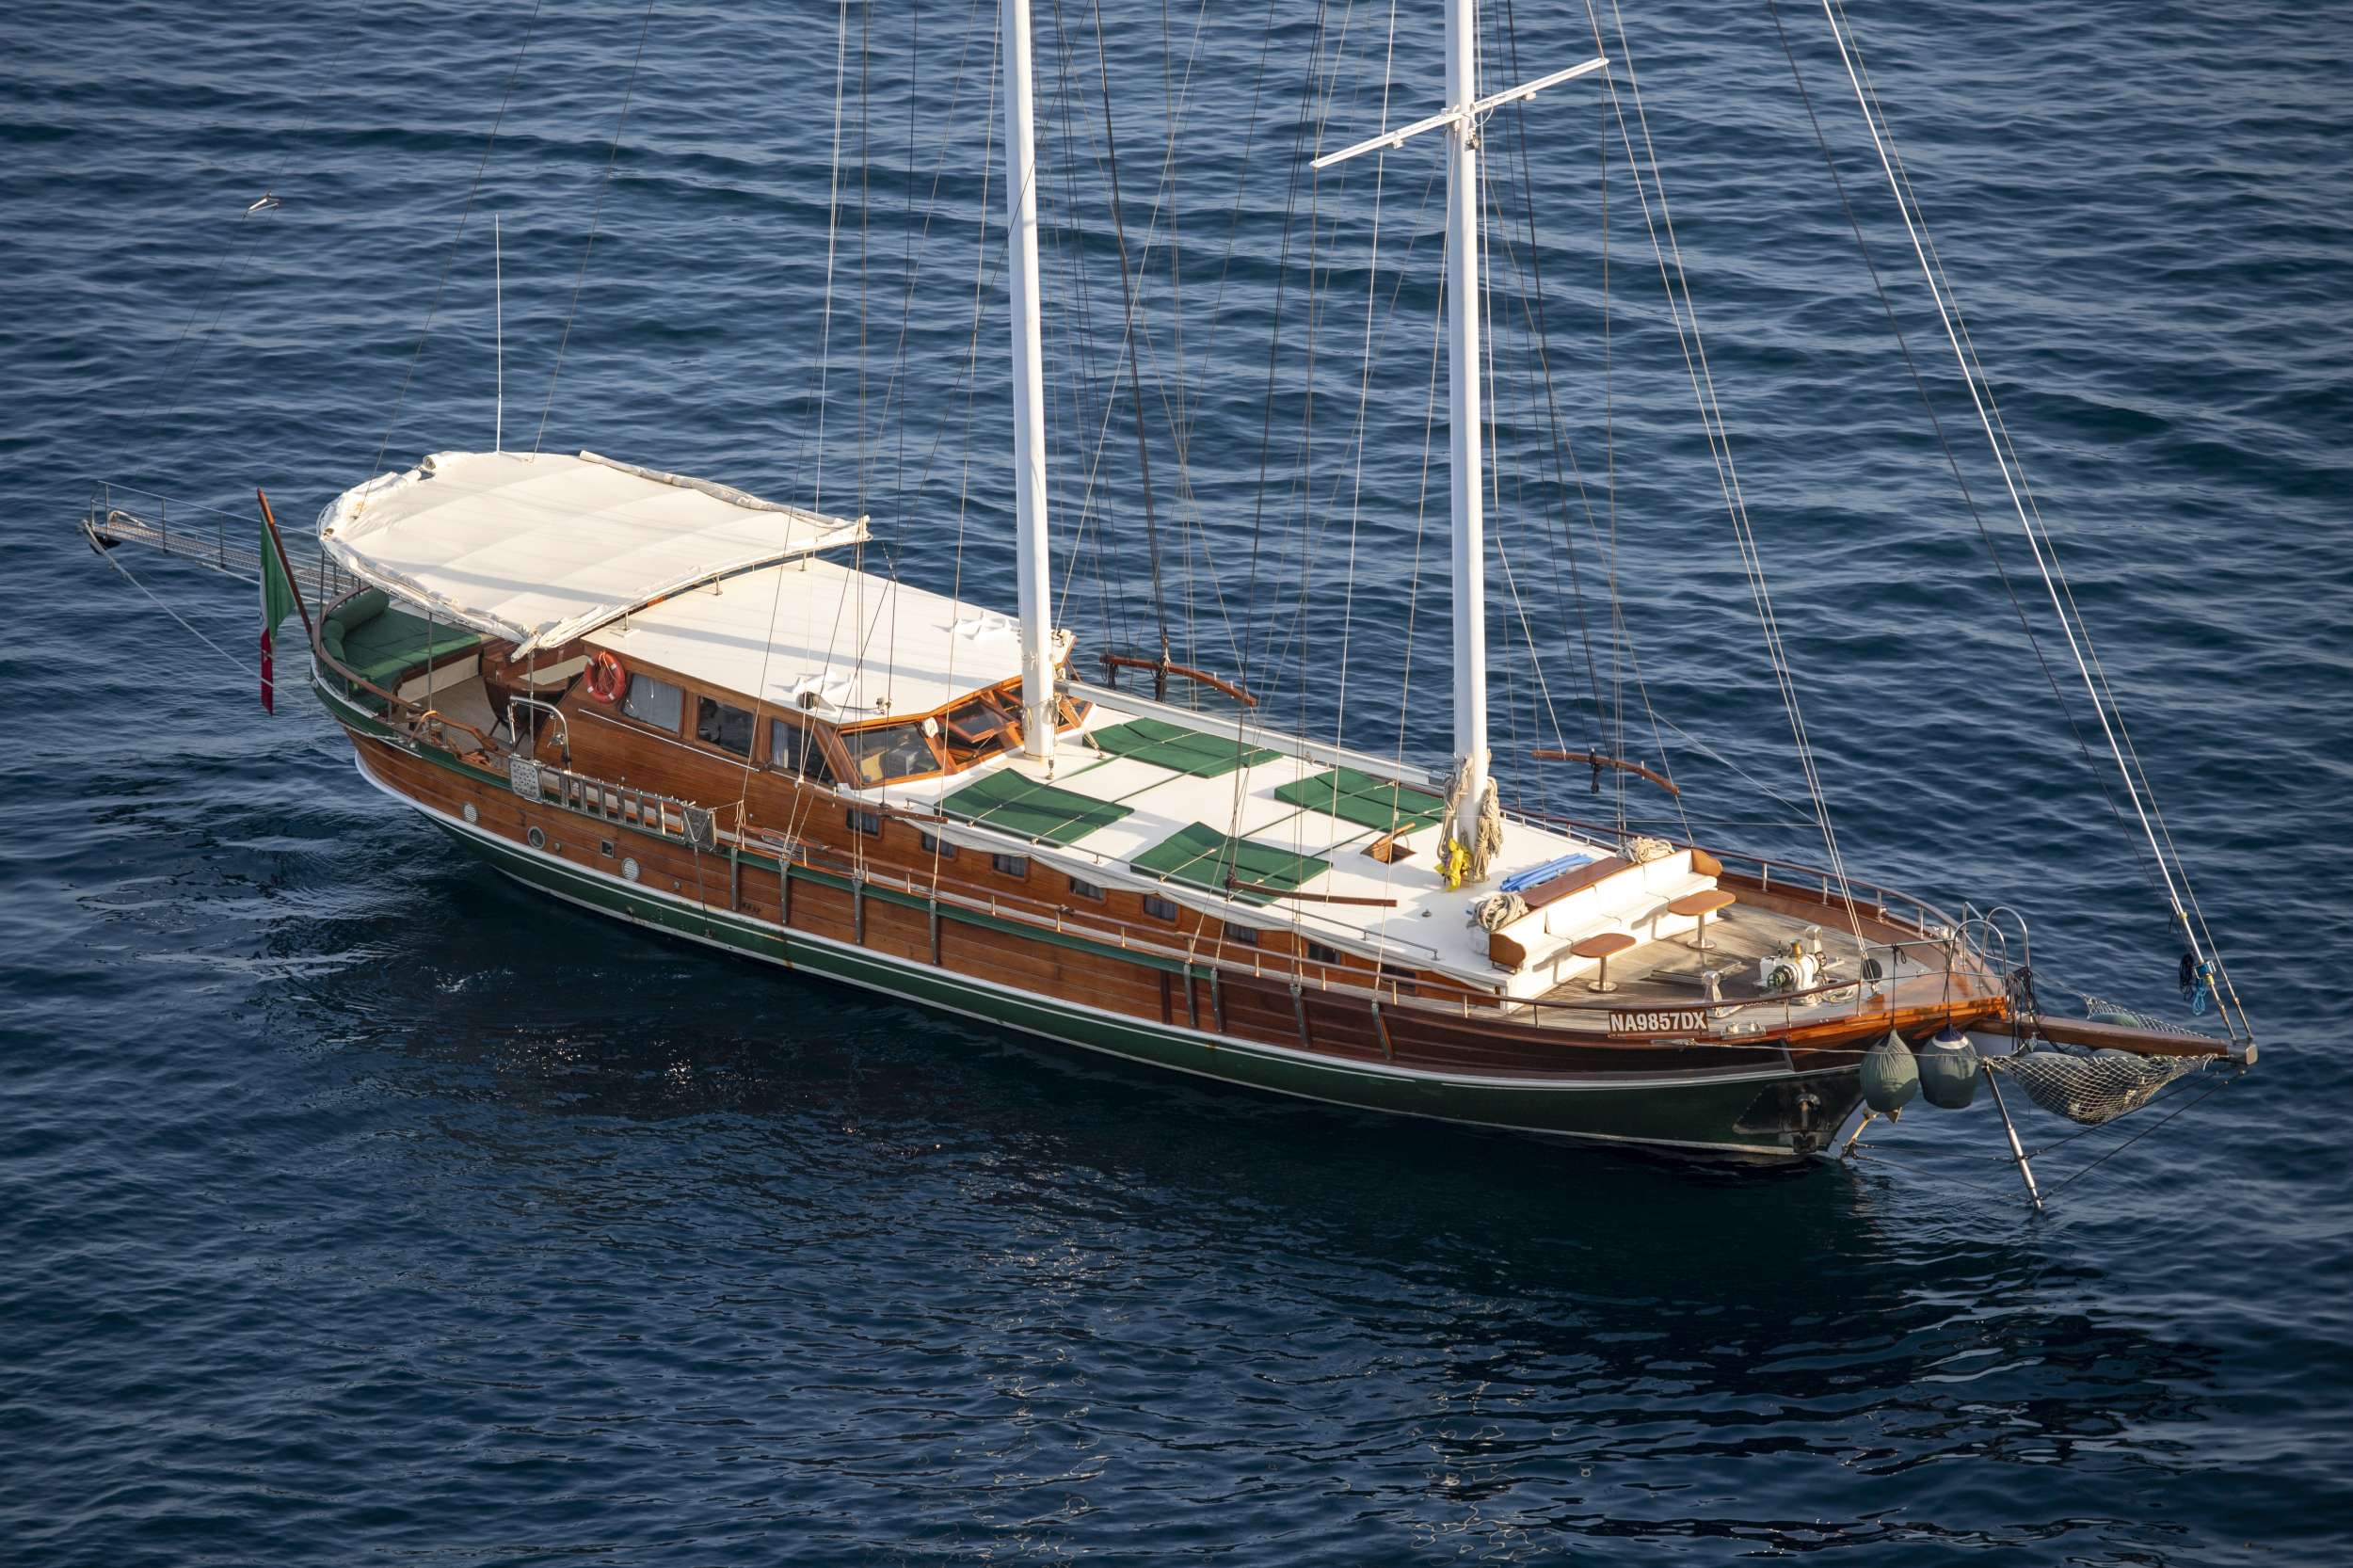 DERIYA DENIZ - Superyacht charter Sicily & Boat hire in Naples/Sicily 1